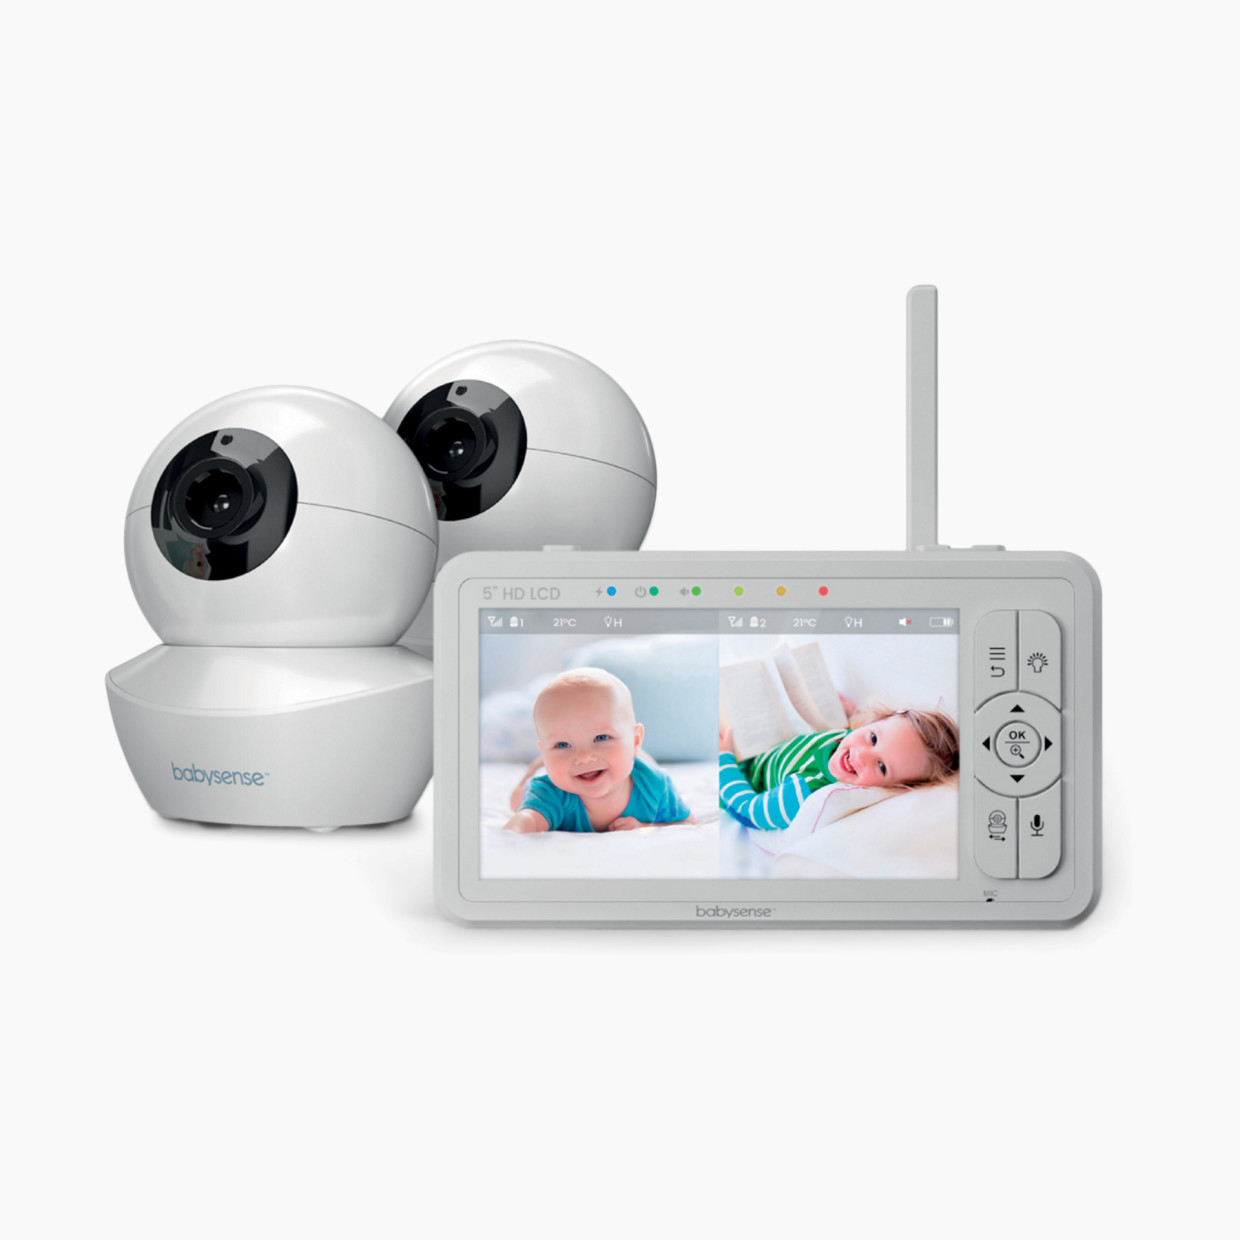 Babysense Split Screen Video Baby Monitor, 4.3 Display with 2 PTZ Cameras,  Long Range, Night Light & Vision, Two-Way Talk, V43 